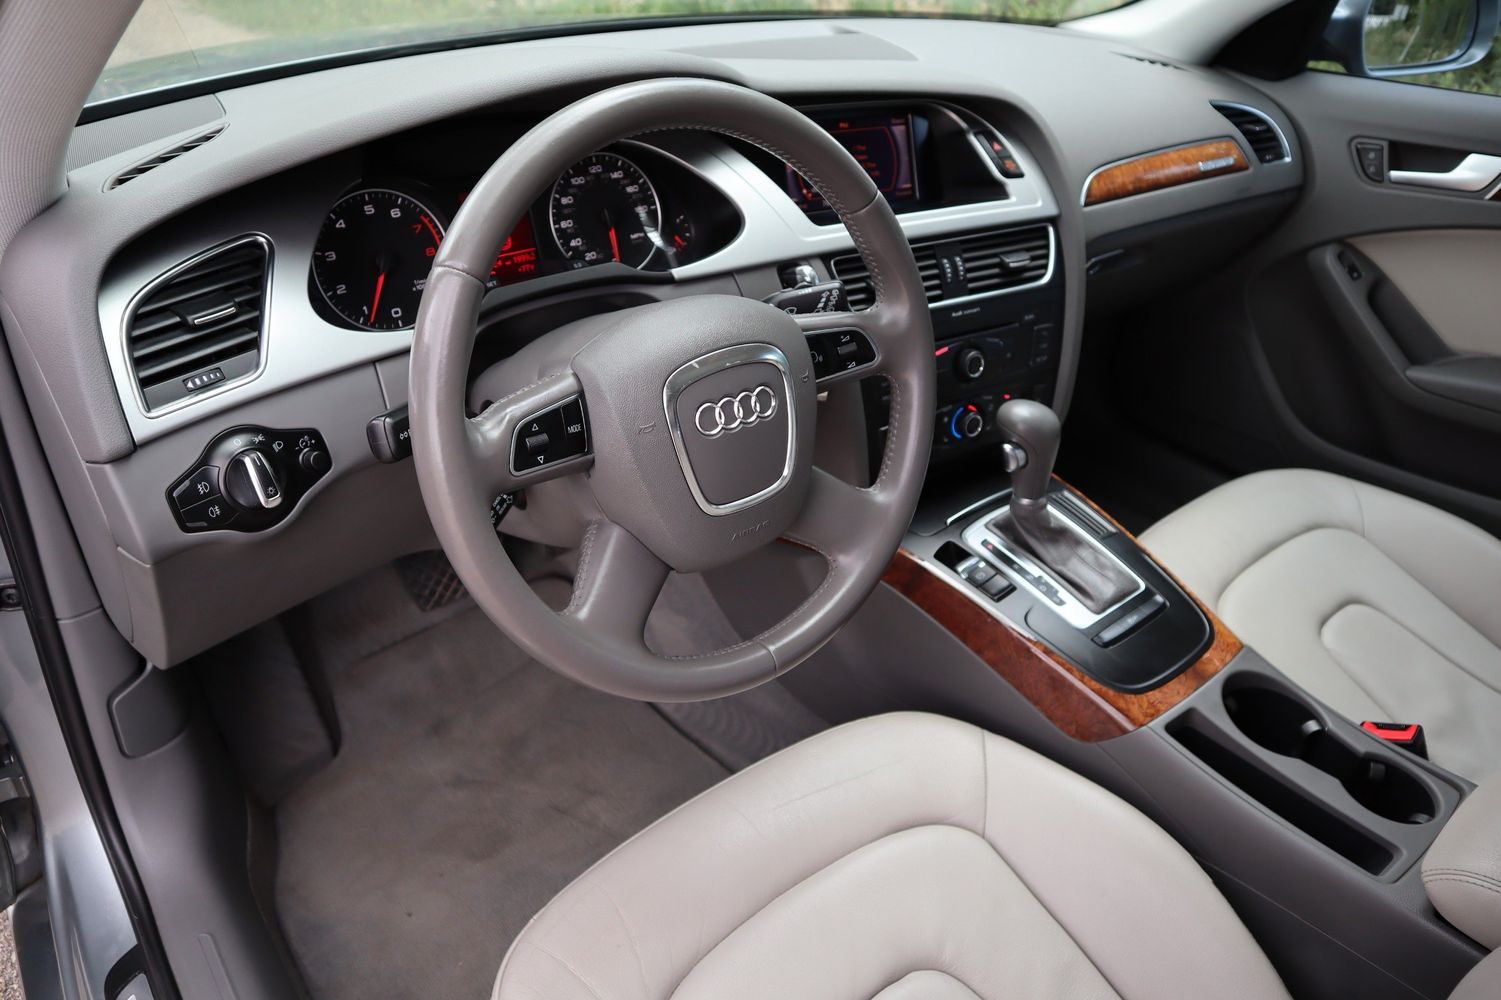 2011 Audi A4 2.0T quattro Avant Premium | Victory Motors of Colorado